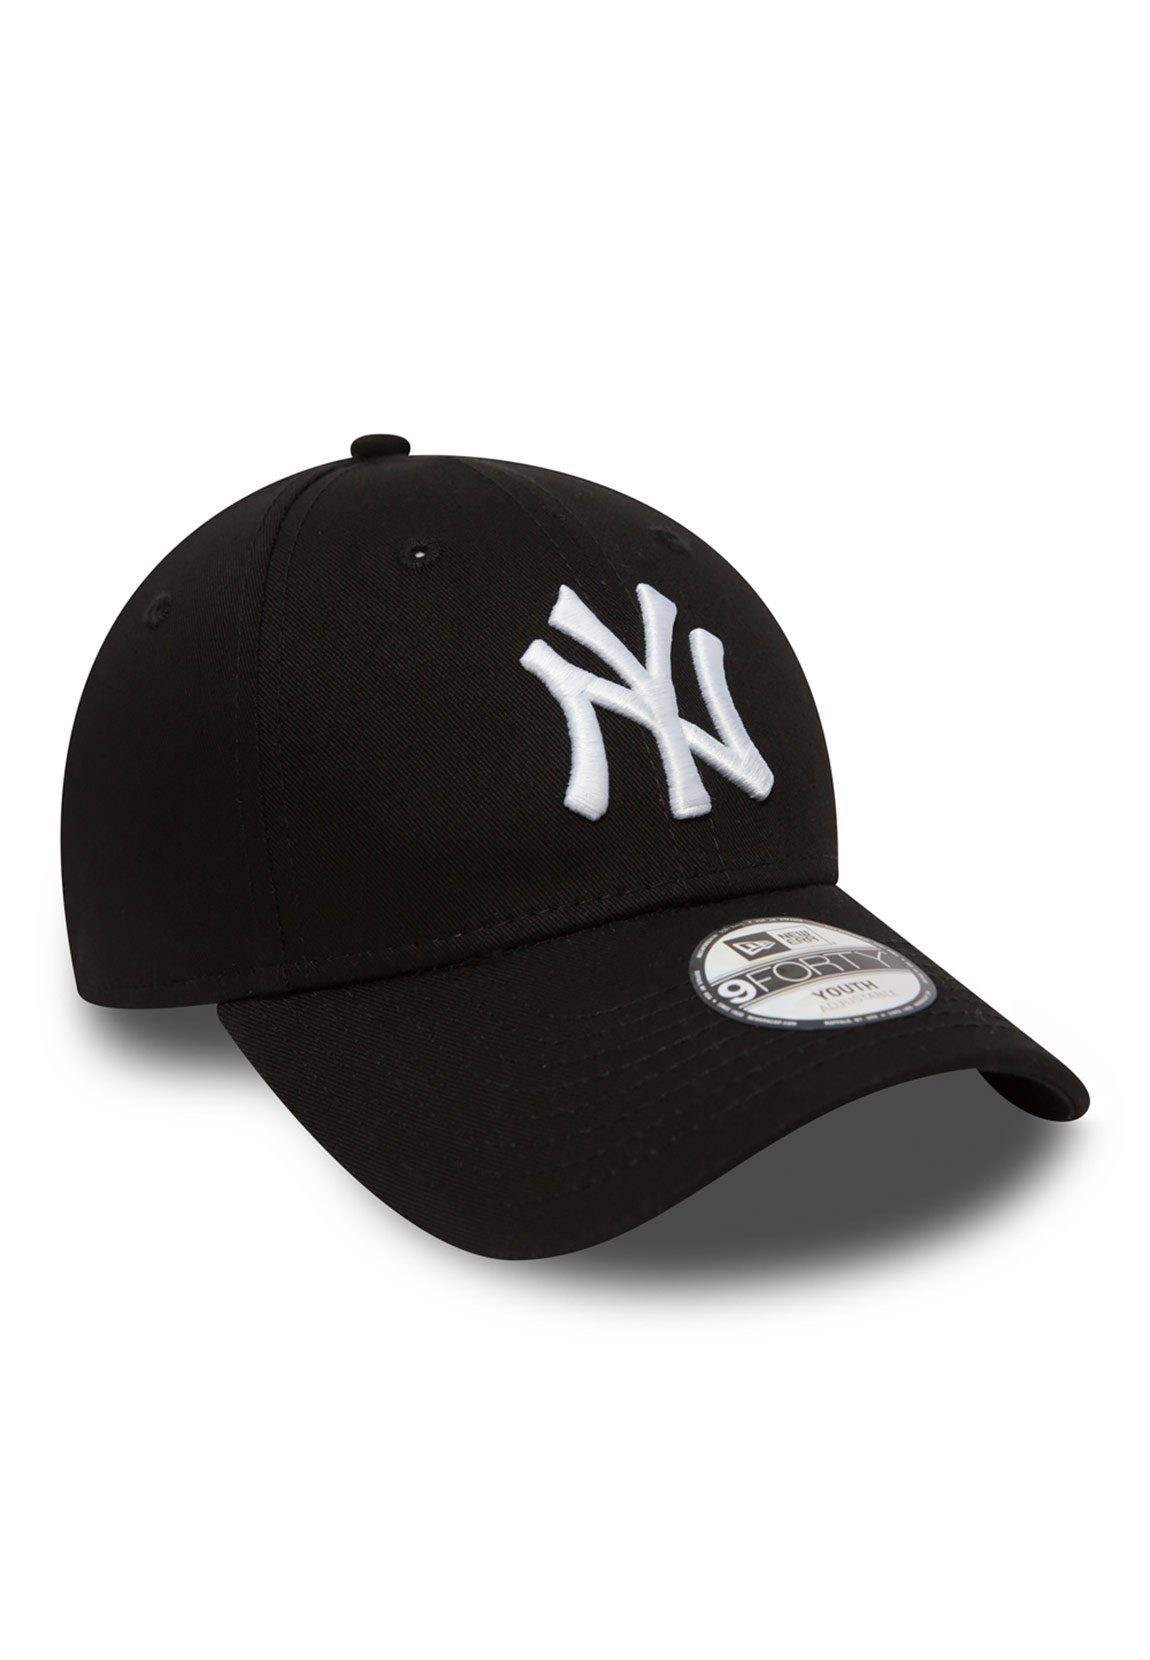 Kids NY YANKEES New Black-White Cap - Era New Adjustables Era Schwarz/Weiß - Cap Baseball